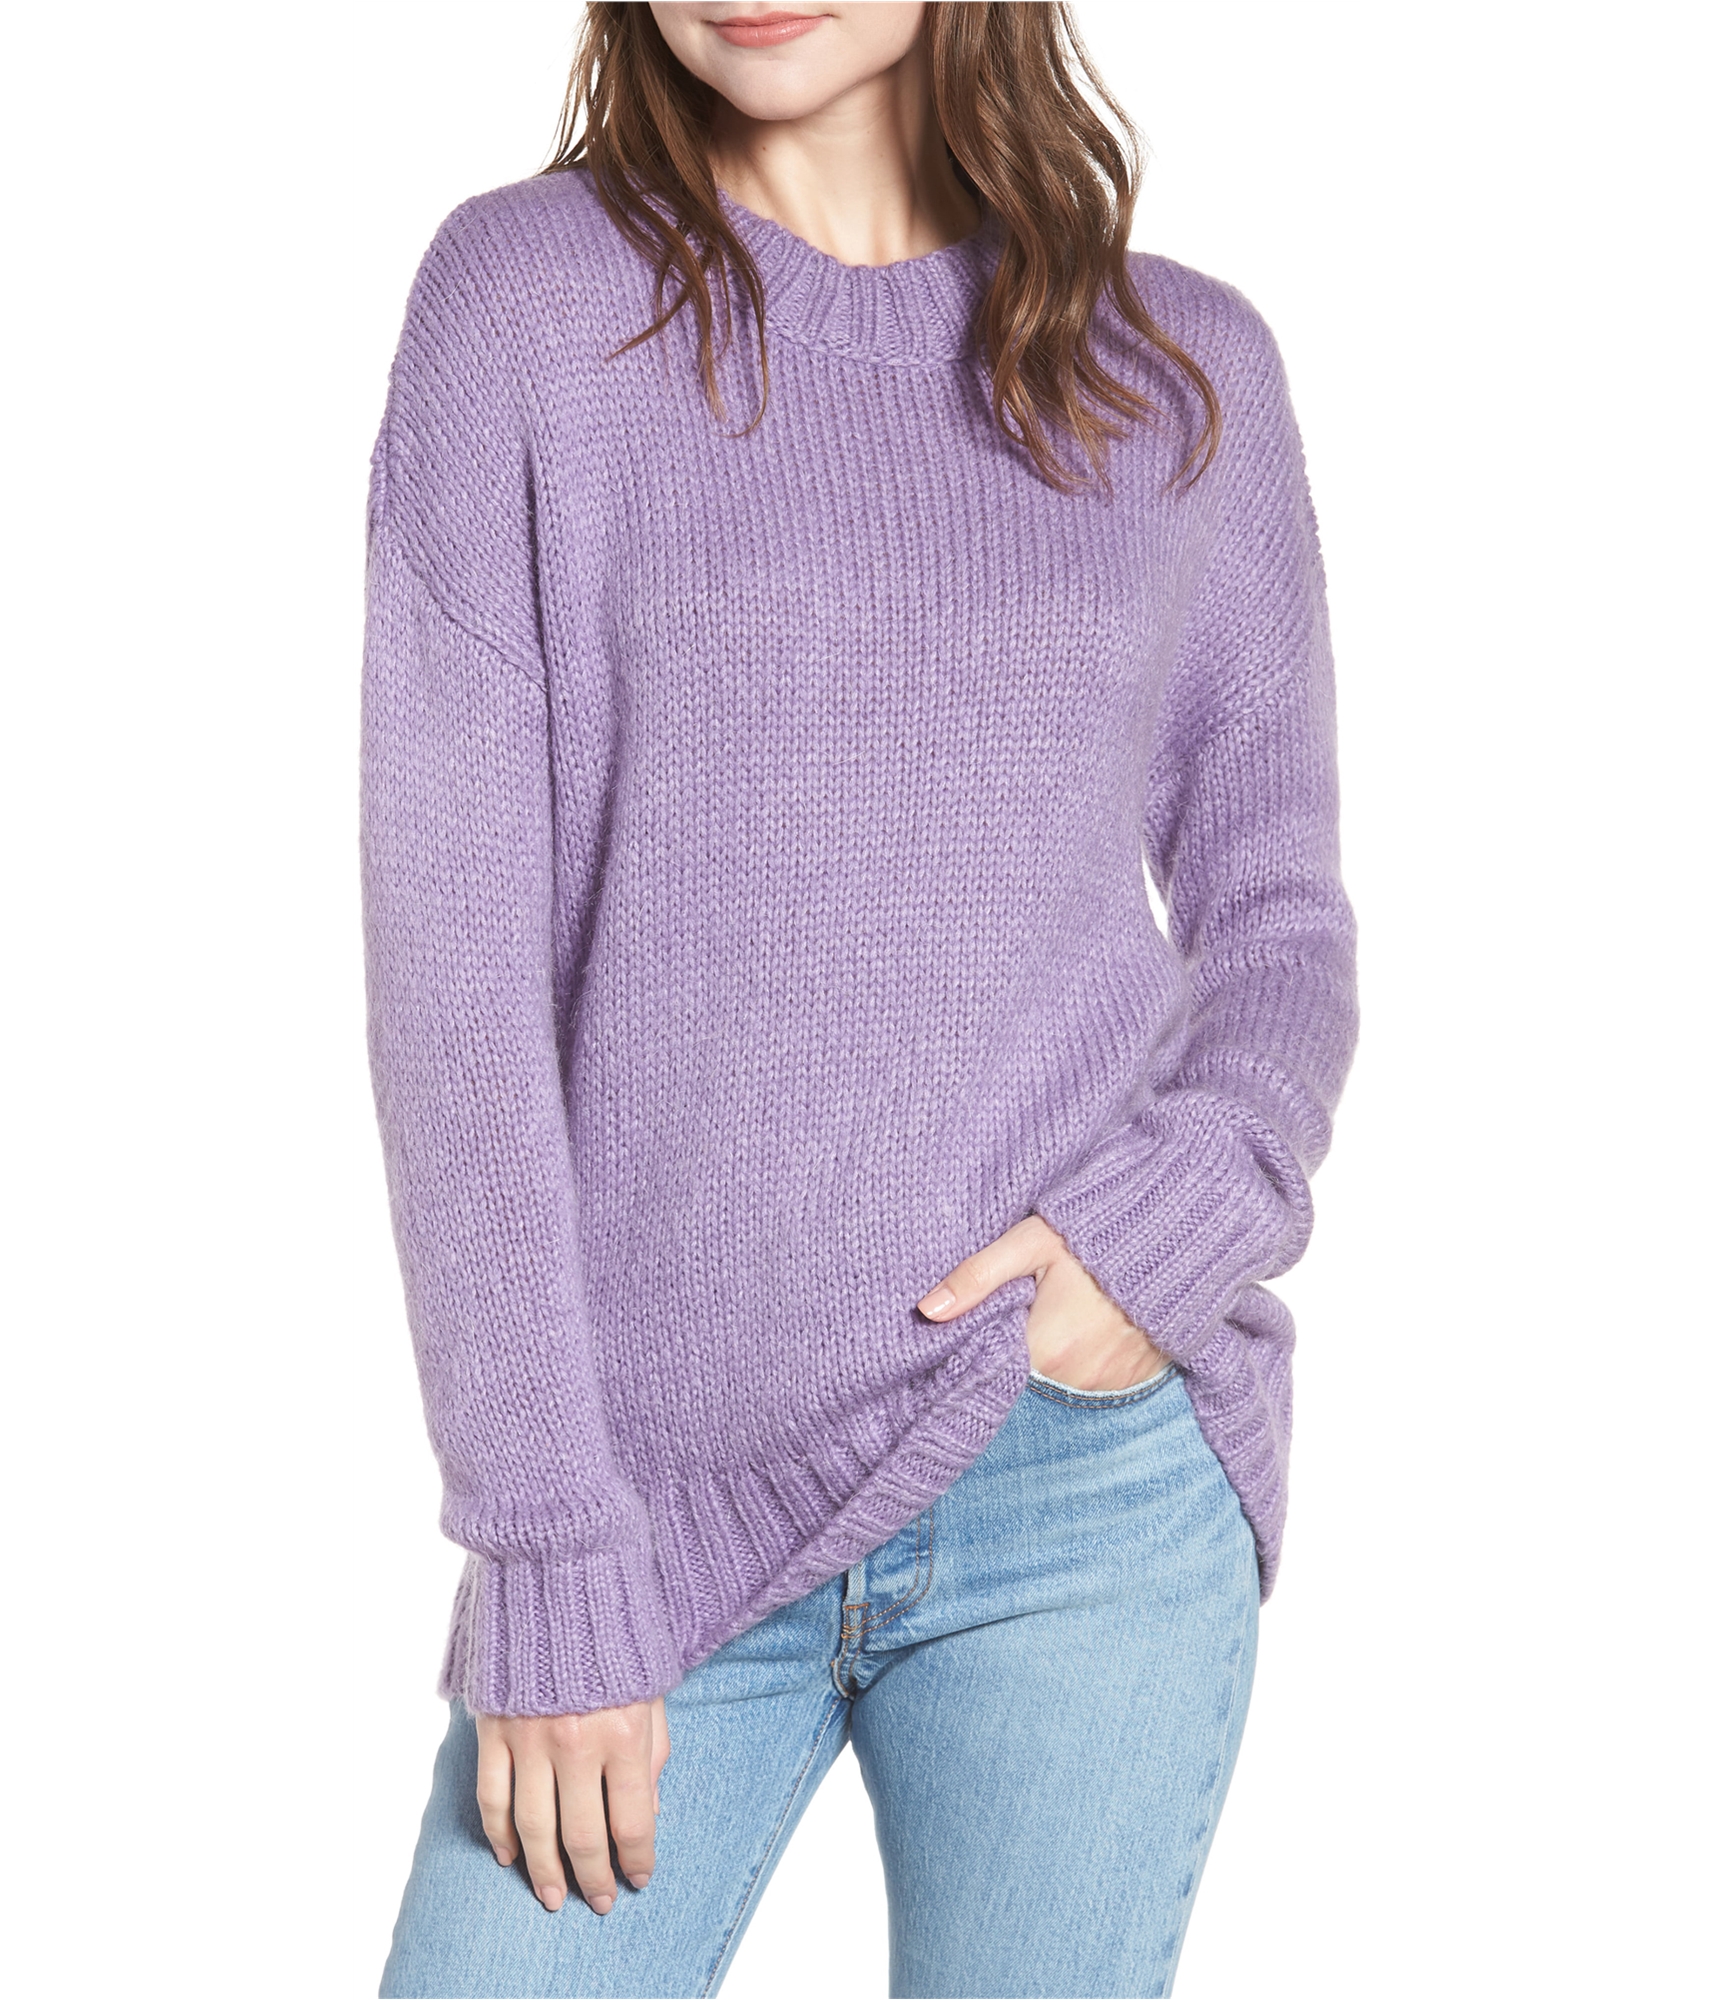 French Womens Sweater | eBay